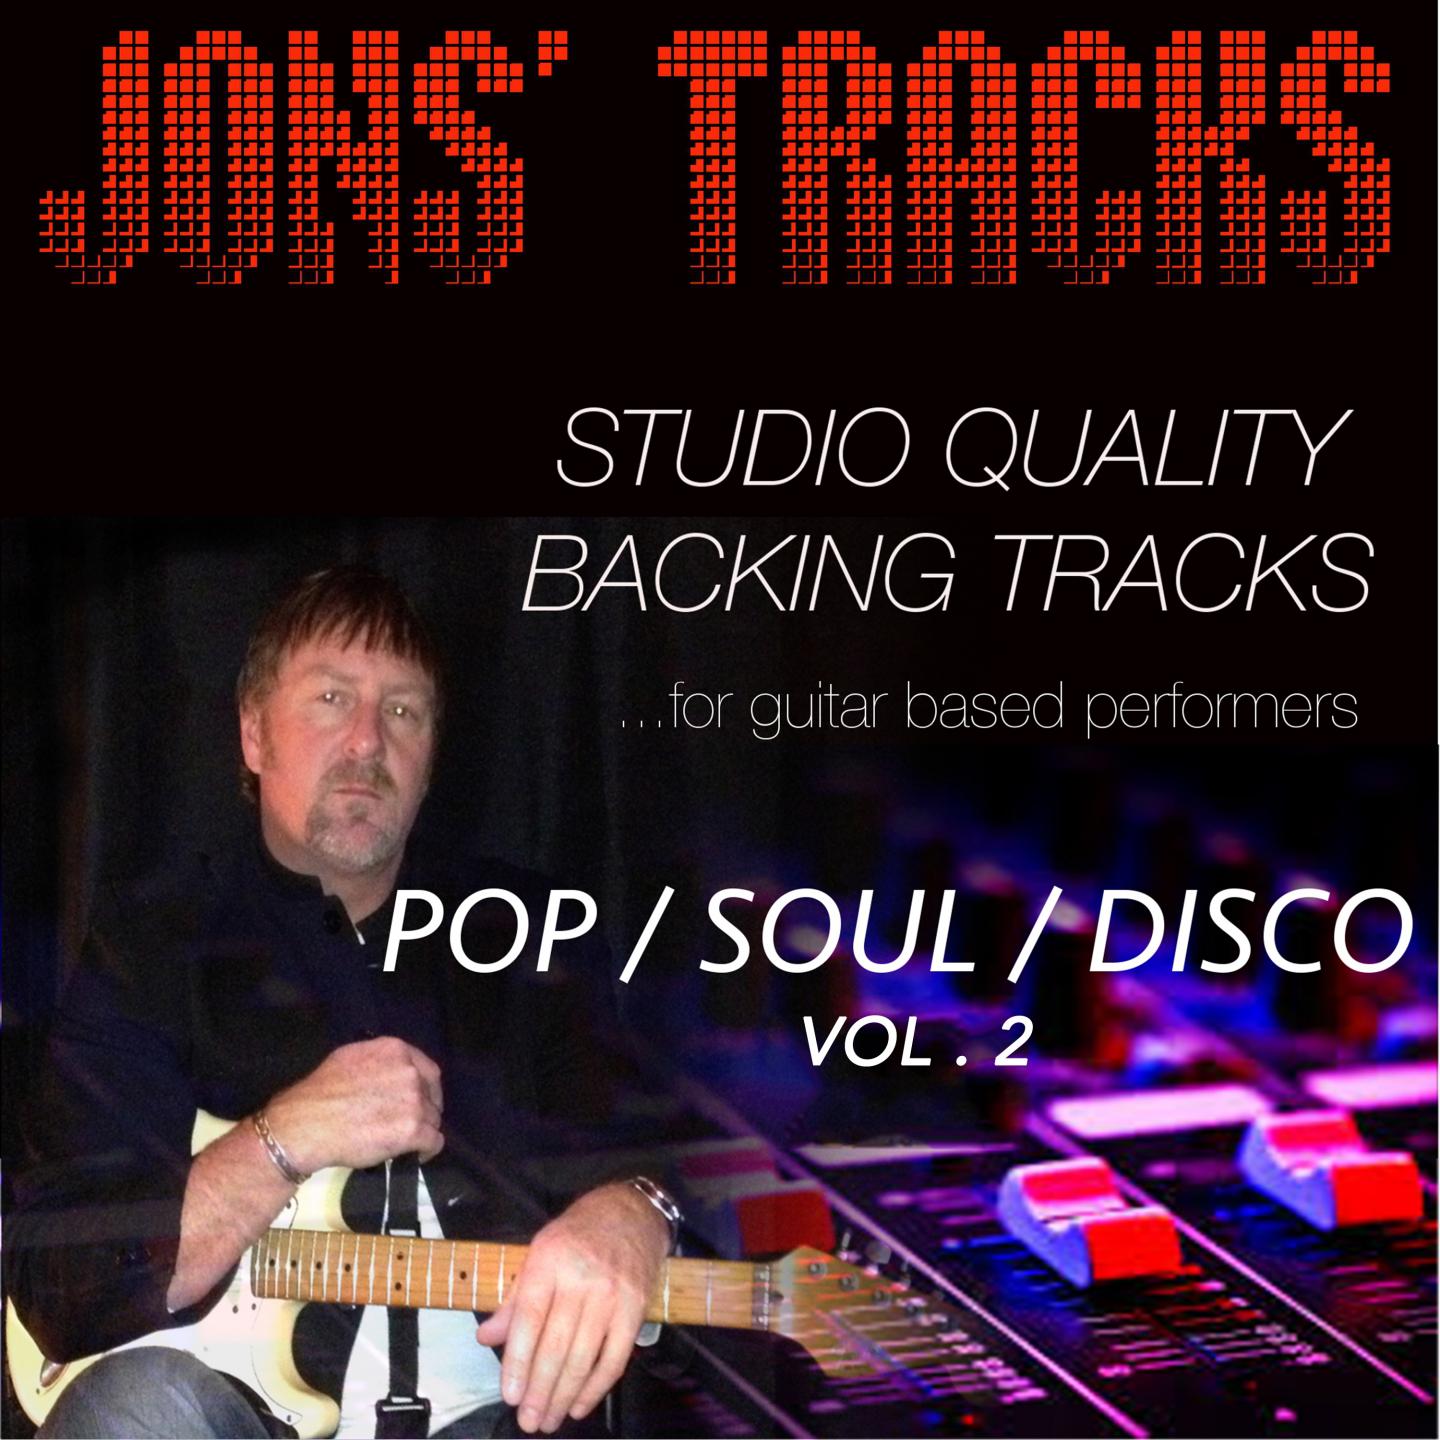 Jon's Tracks: Pop / Soul / Disco, Vol. 2